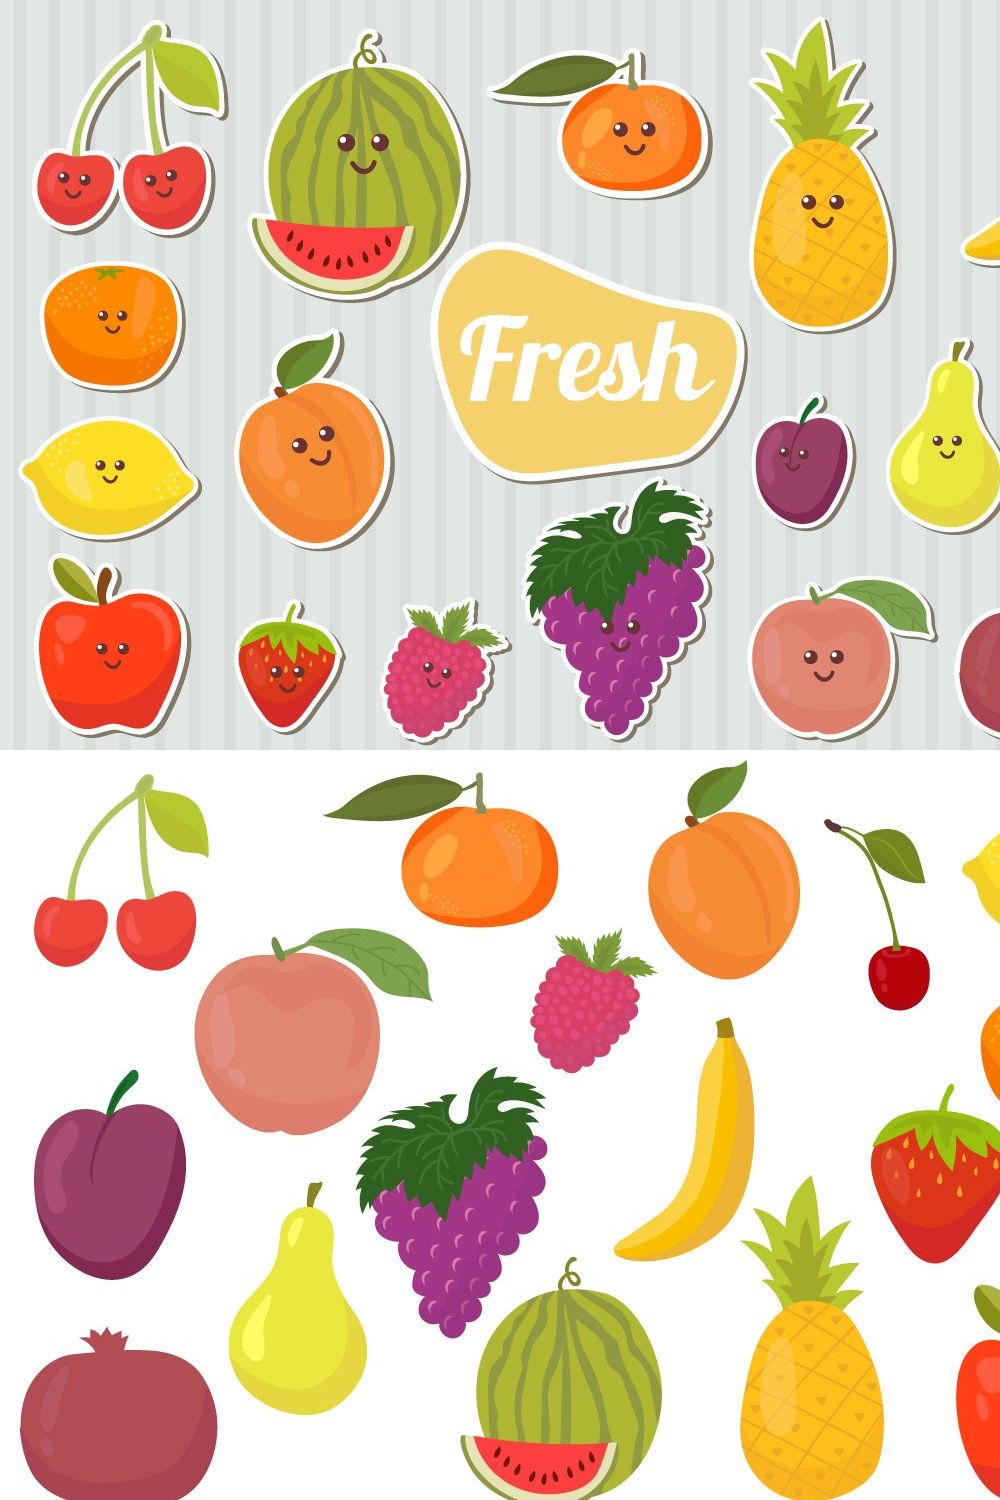 Fresh fruits. Kawaii pinterest preview image.